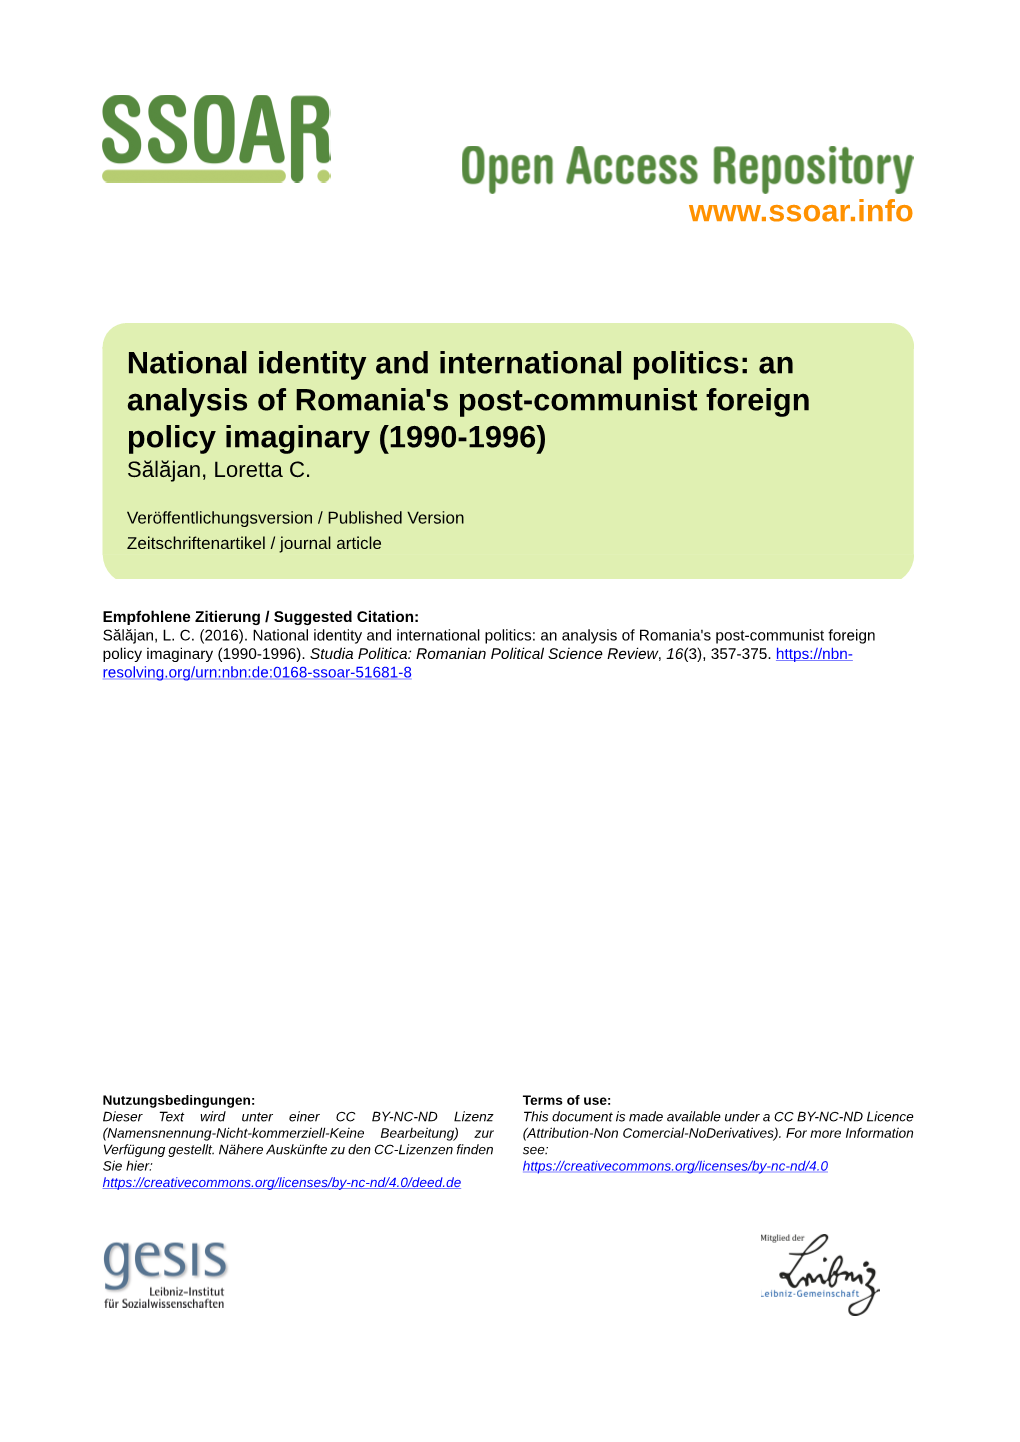 National Identity and International Politics: an Analysis of Romania's Post-Communist Foreign Policy Imaginary (1990-1996) Sălăjan, Loretta C